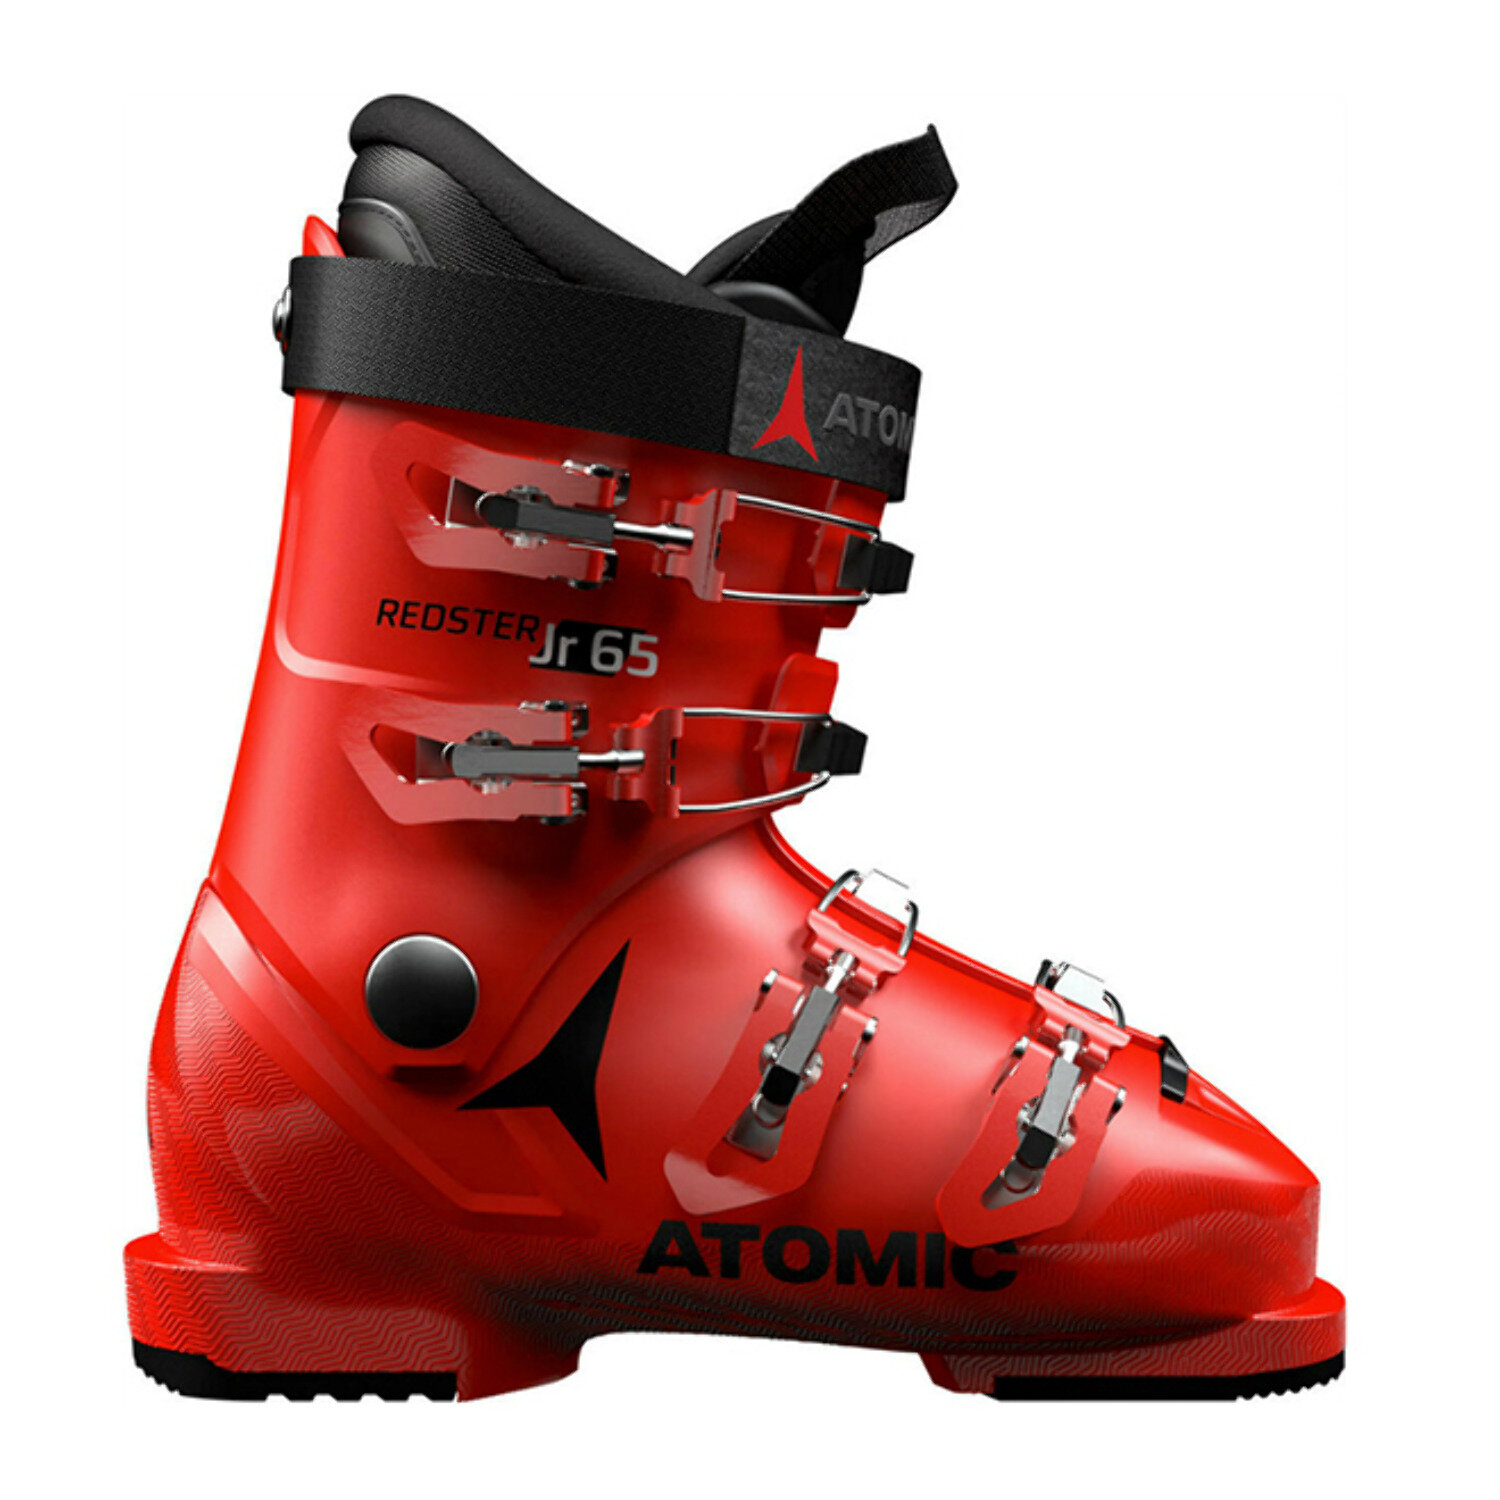 Горнолыжные ботинки Atomic Redster Jr 65 Red/Black (23.5)20/21